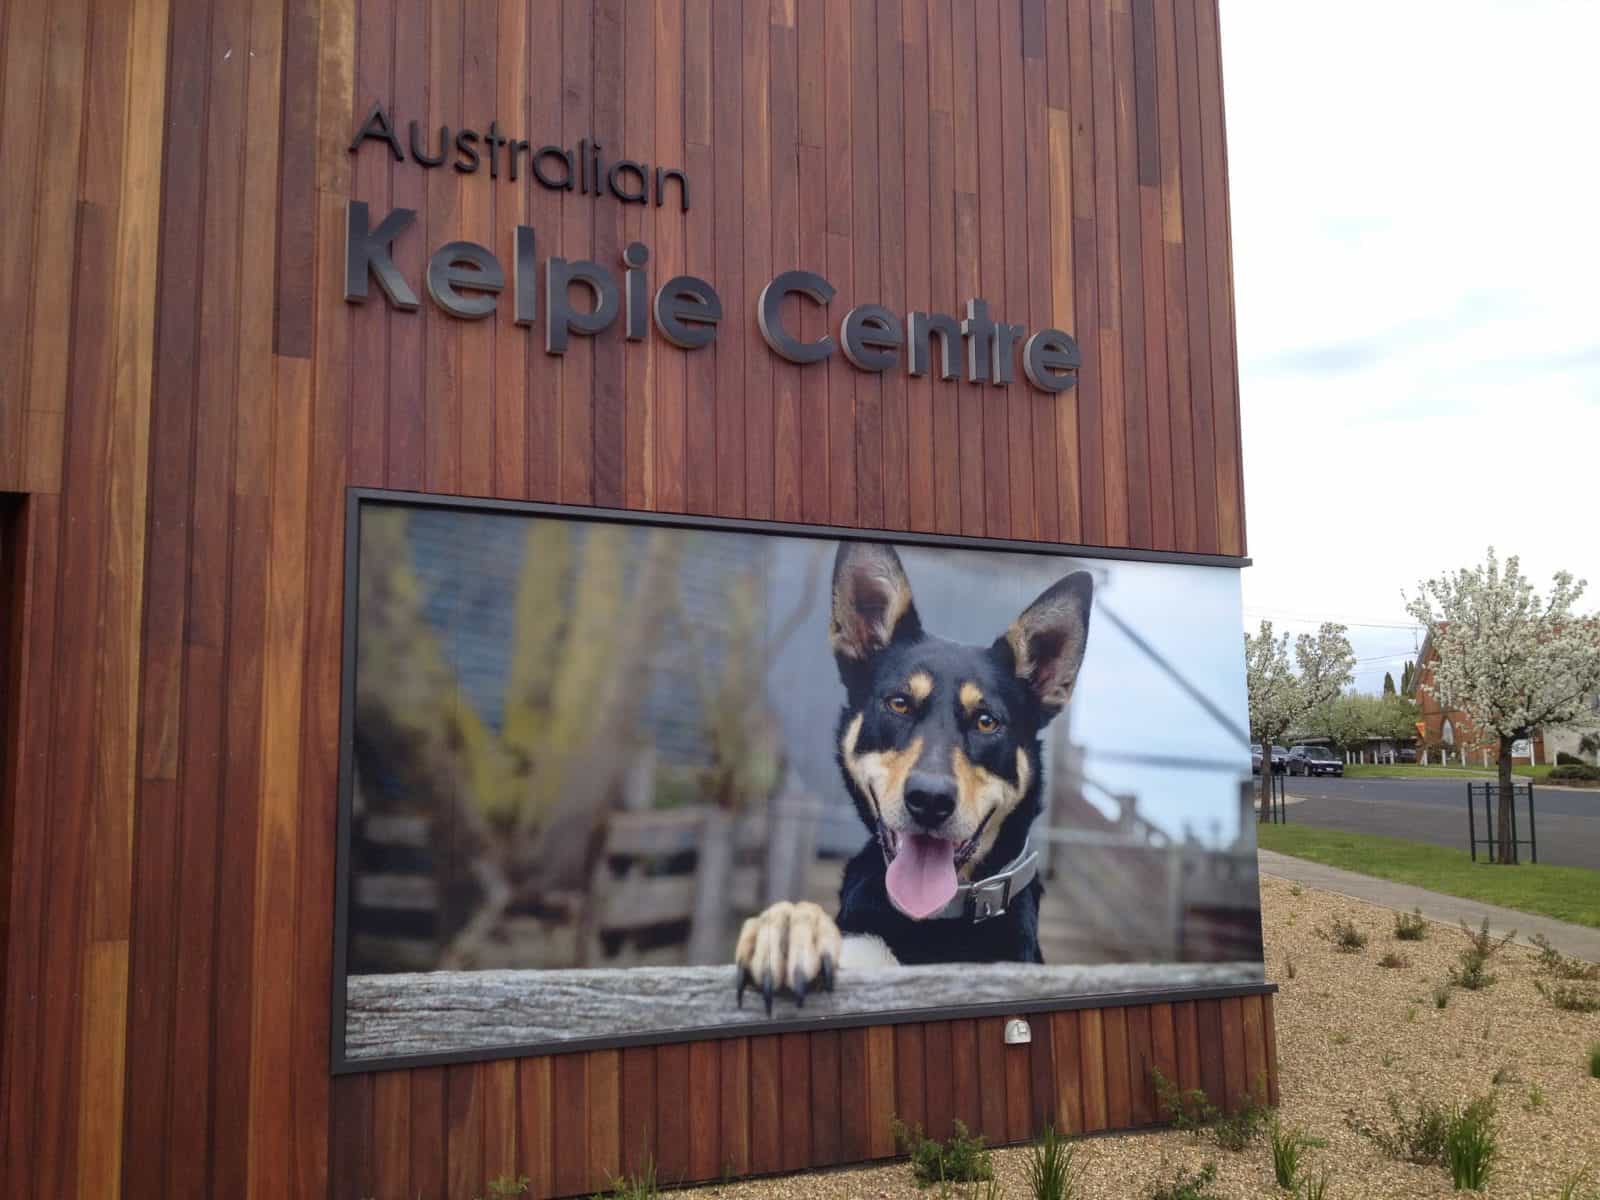 Australian Kelpie Centre